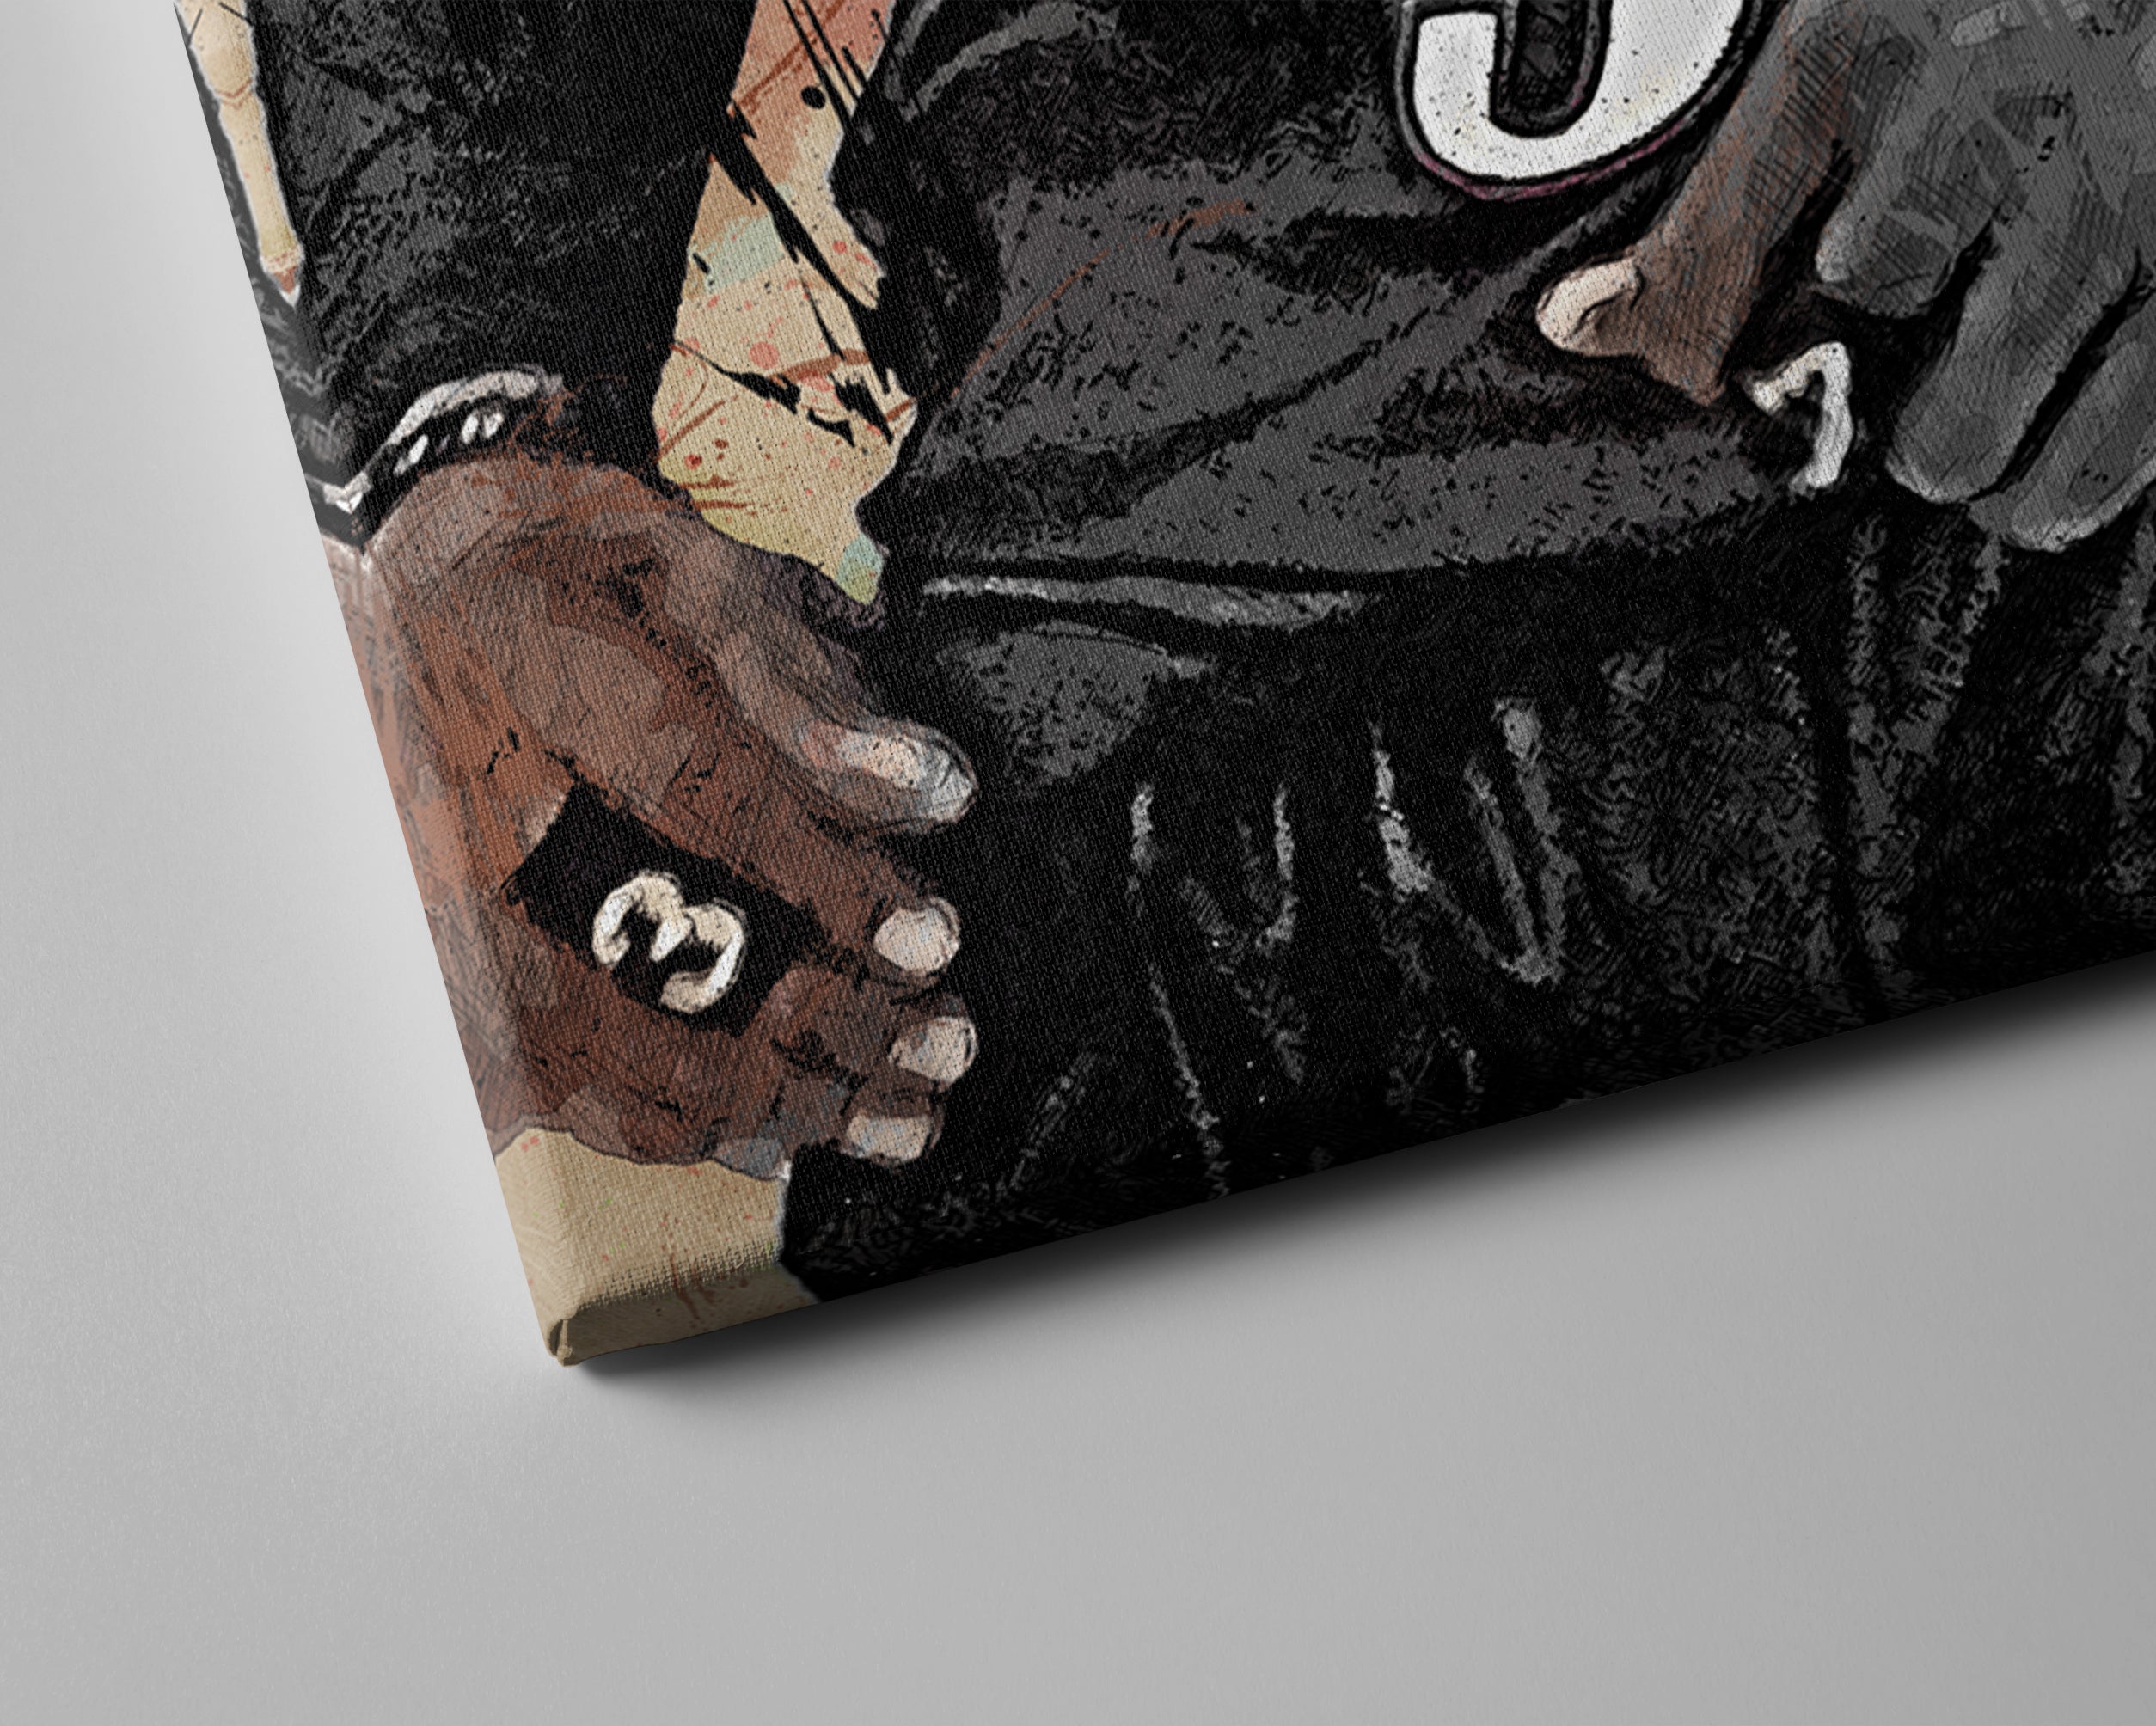 Philadelphia 76ers Jersey Custom Canvas Print Wall Art for Boy